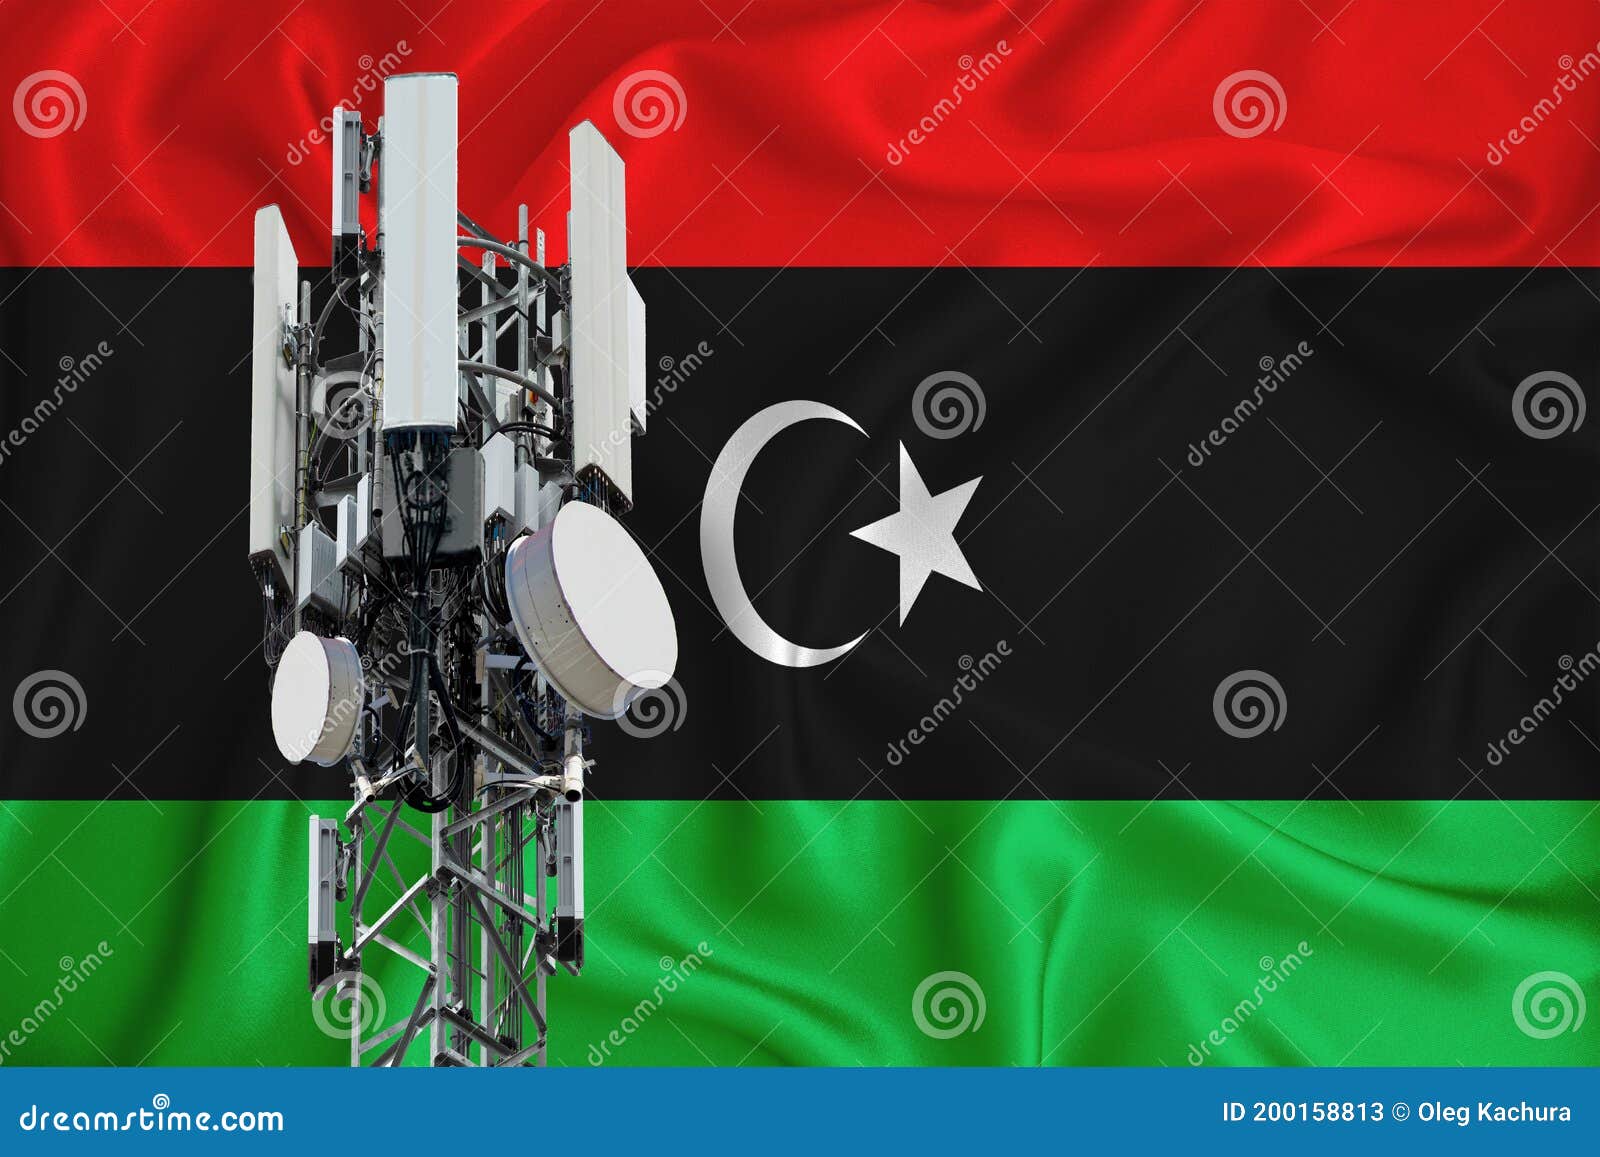 Libya Flag, Background with Space for Your Logo - Industrial 3D  Illustration. 5G Smart Mobile Phone Radio Network Antenna Base Stock  Illustration - Illustration of industrial, telecom: 200158813